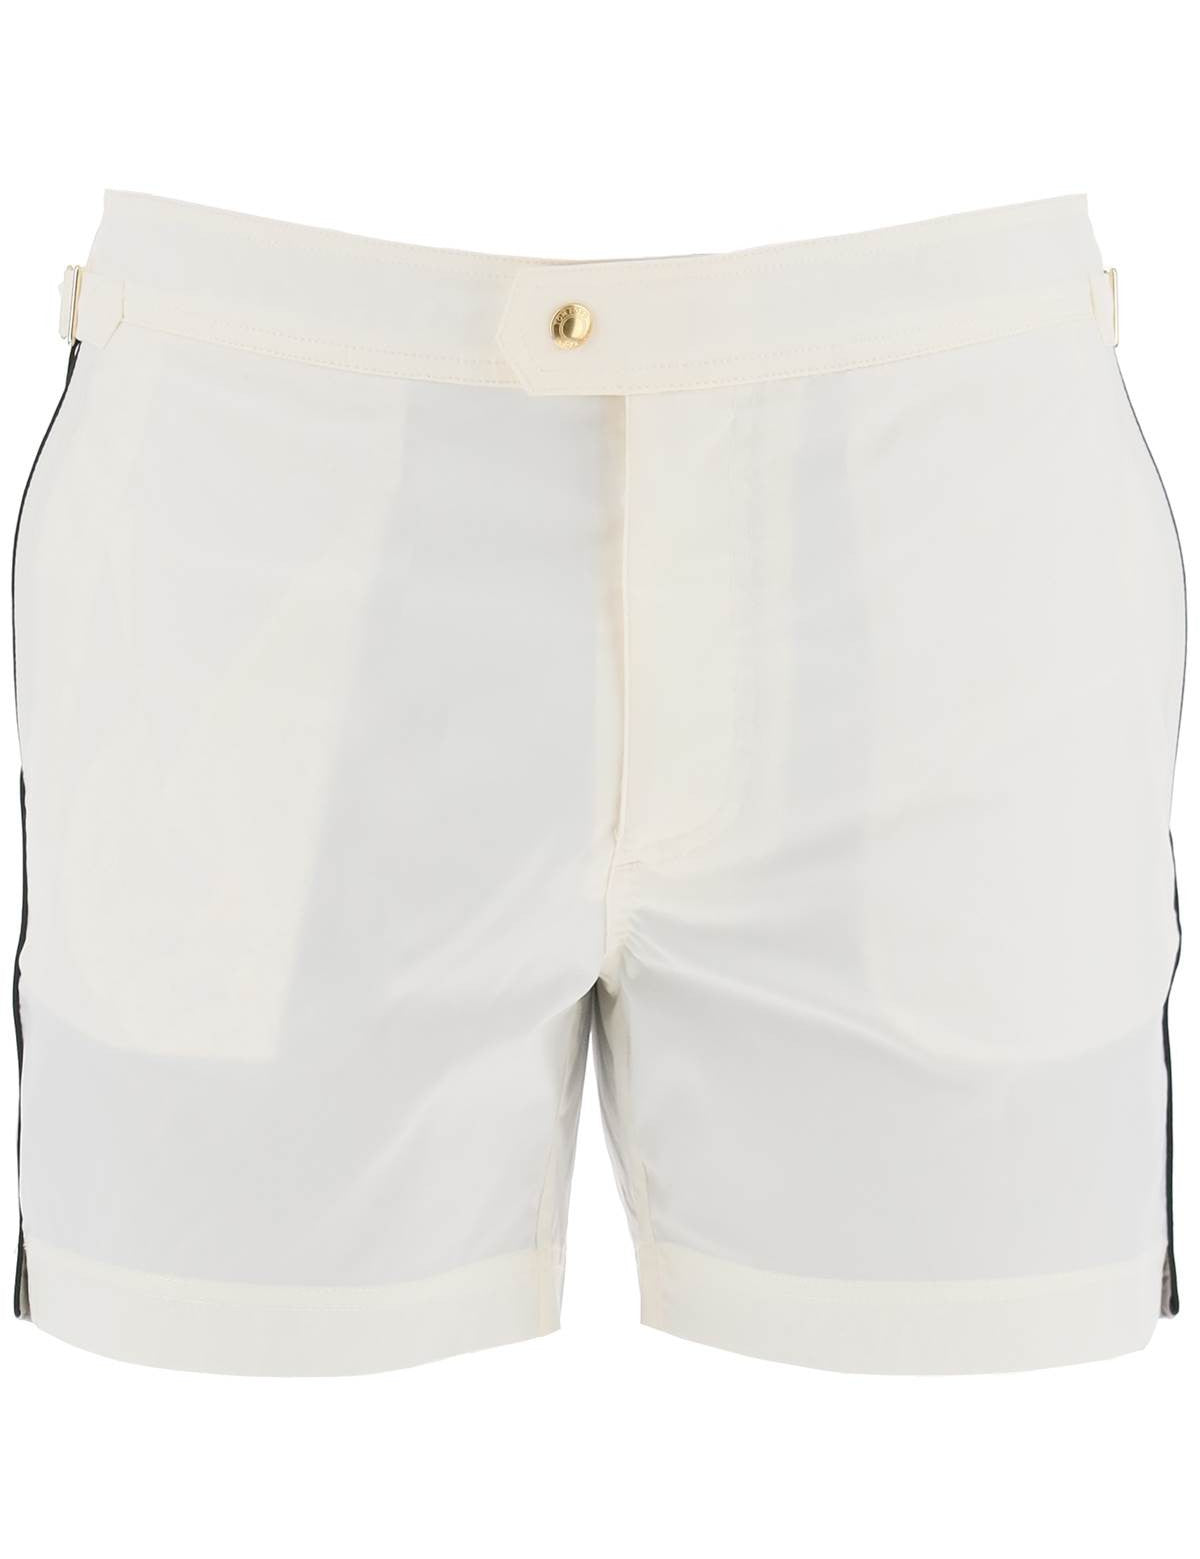 tom-ford-contrast-piping-sea-bermuda-shorts.jpg